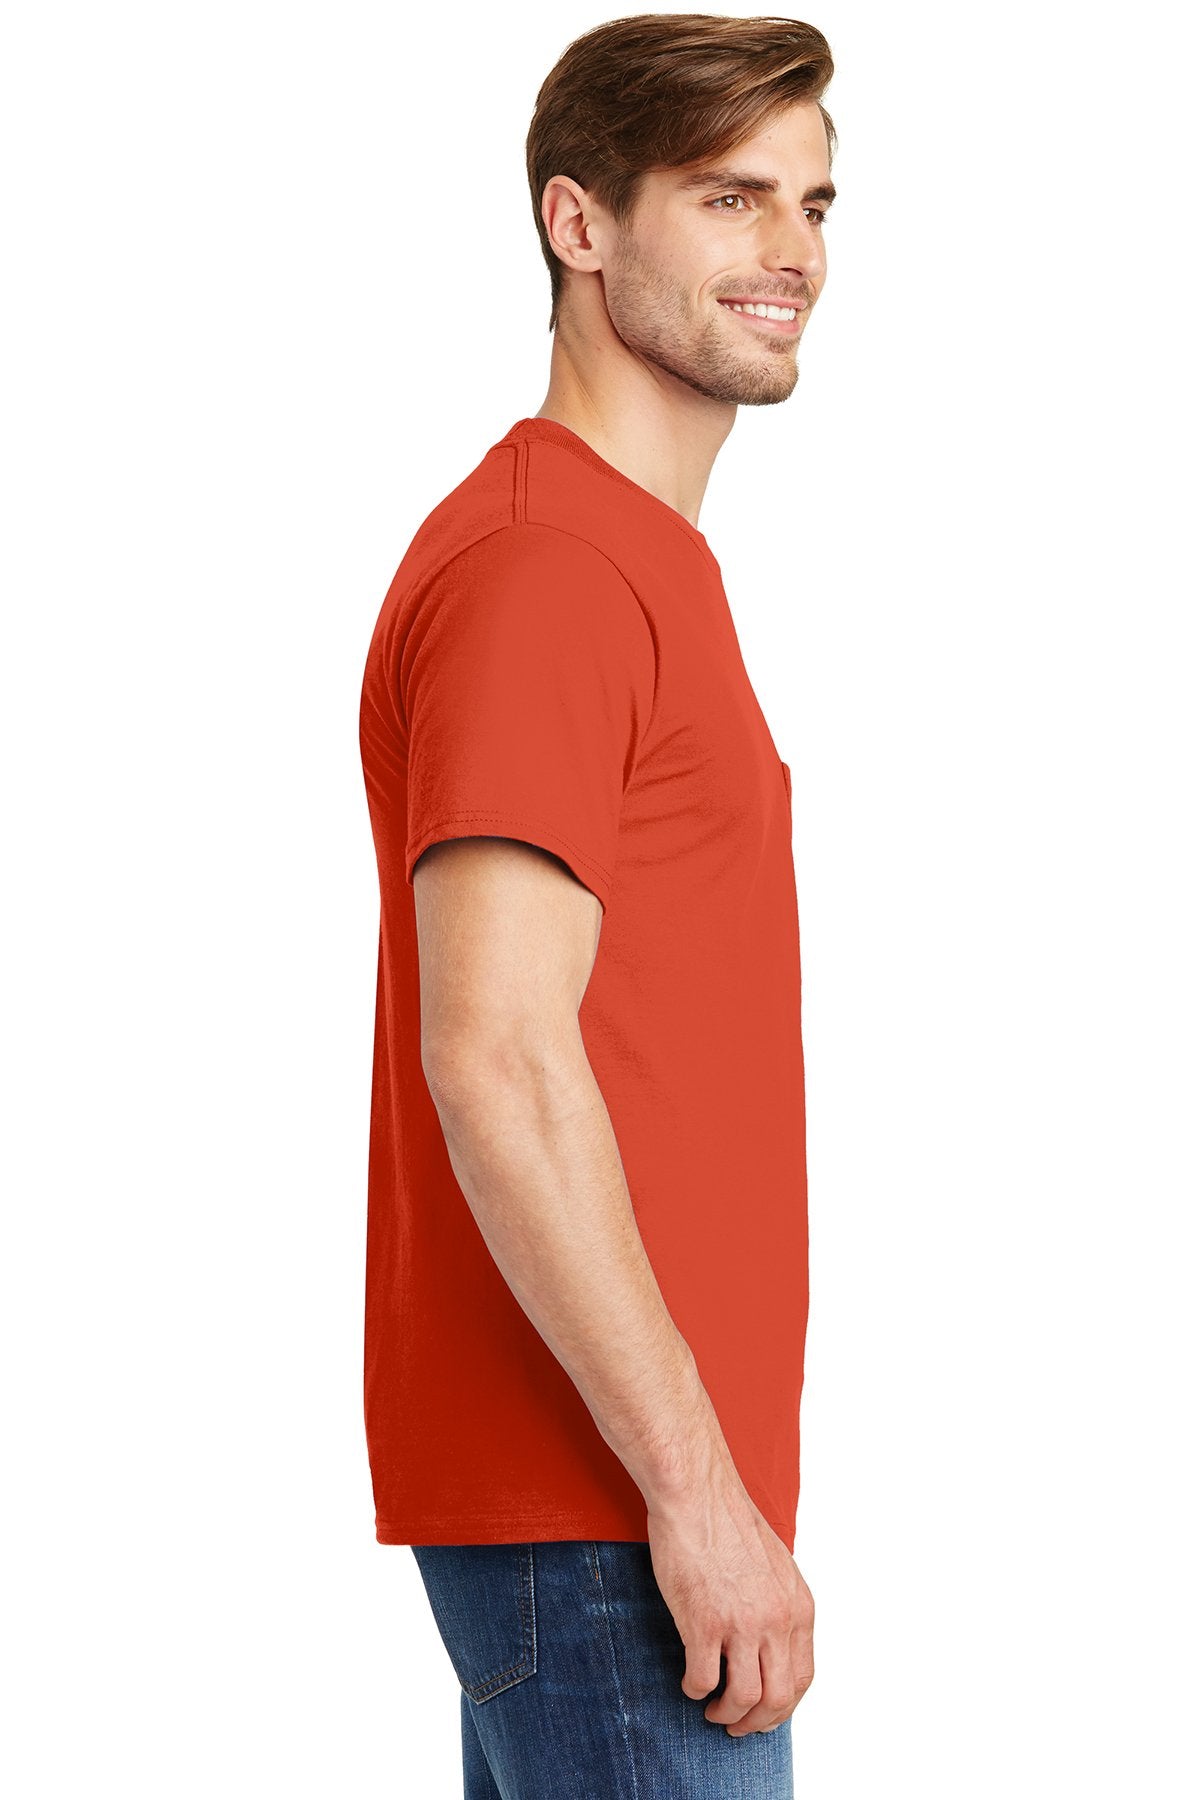 hanes beefy cotton t shirt with pocket 5190 orange